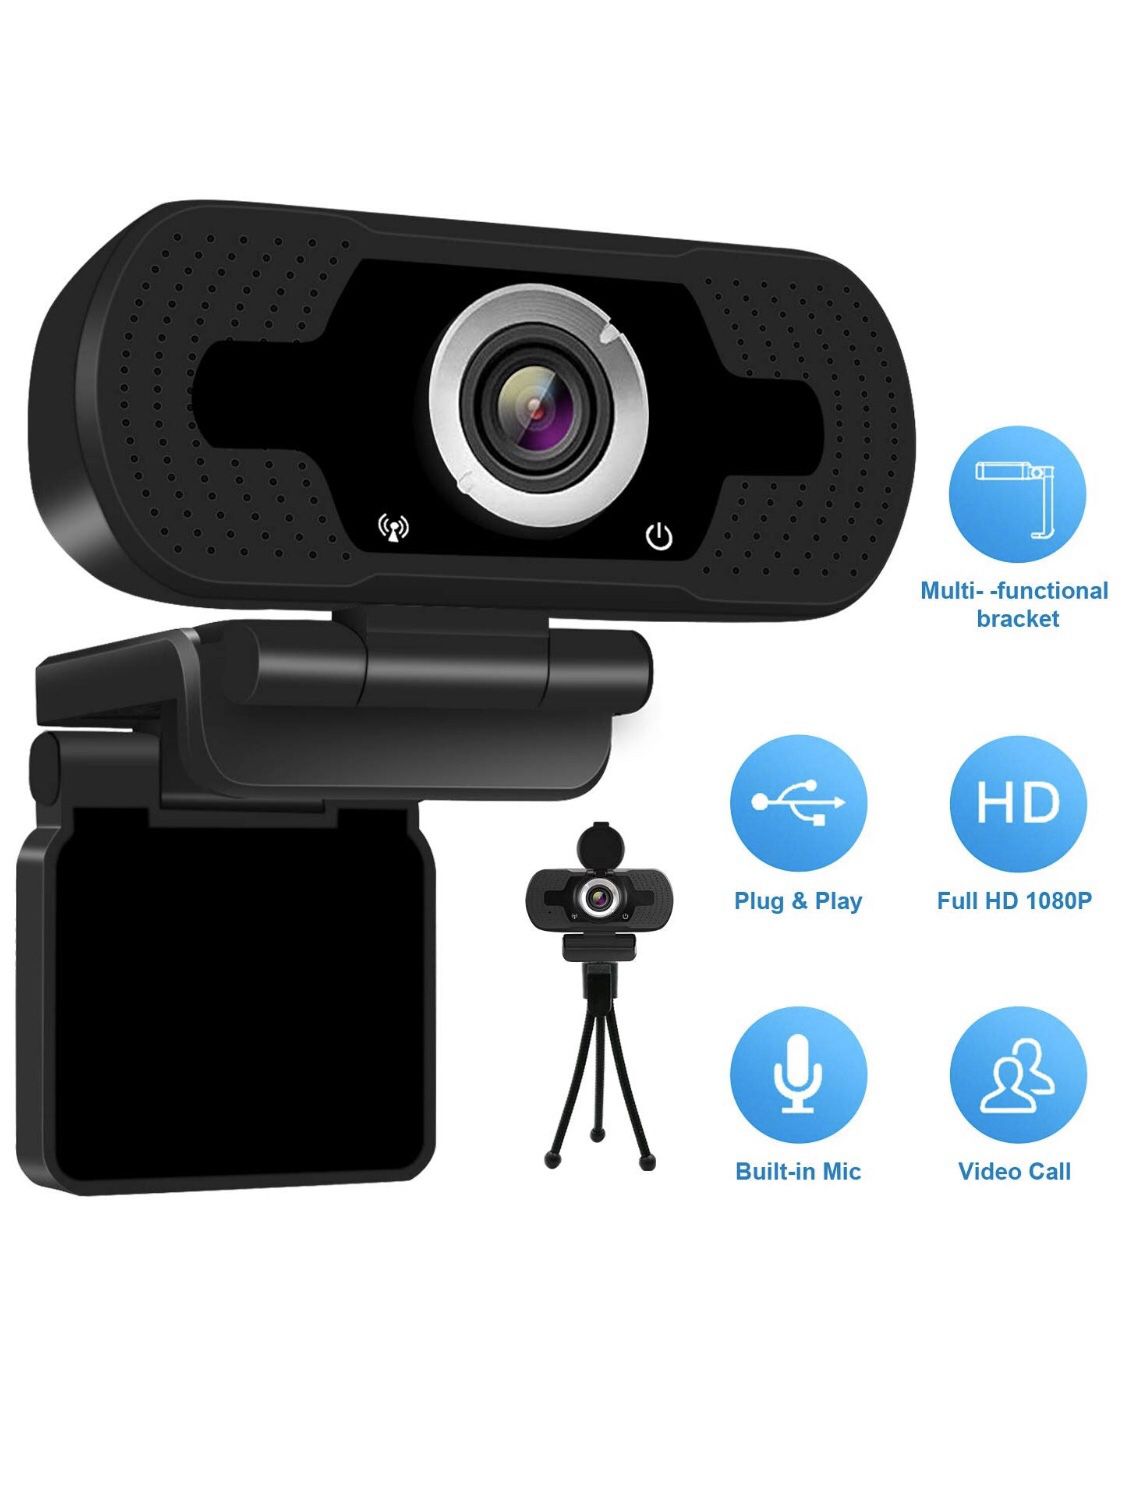 Anivia 1080p HD Webcam W8, USB Desktop Laptop Camera, Mini Plug and Play Video Calling Computer Camera, Built-in Mic, Flexible Rotatable Clip